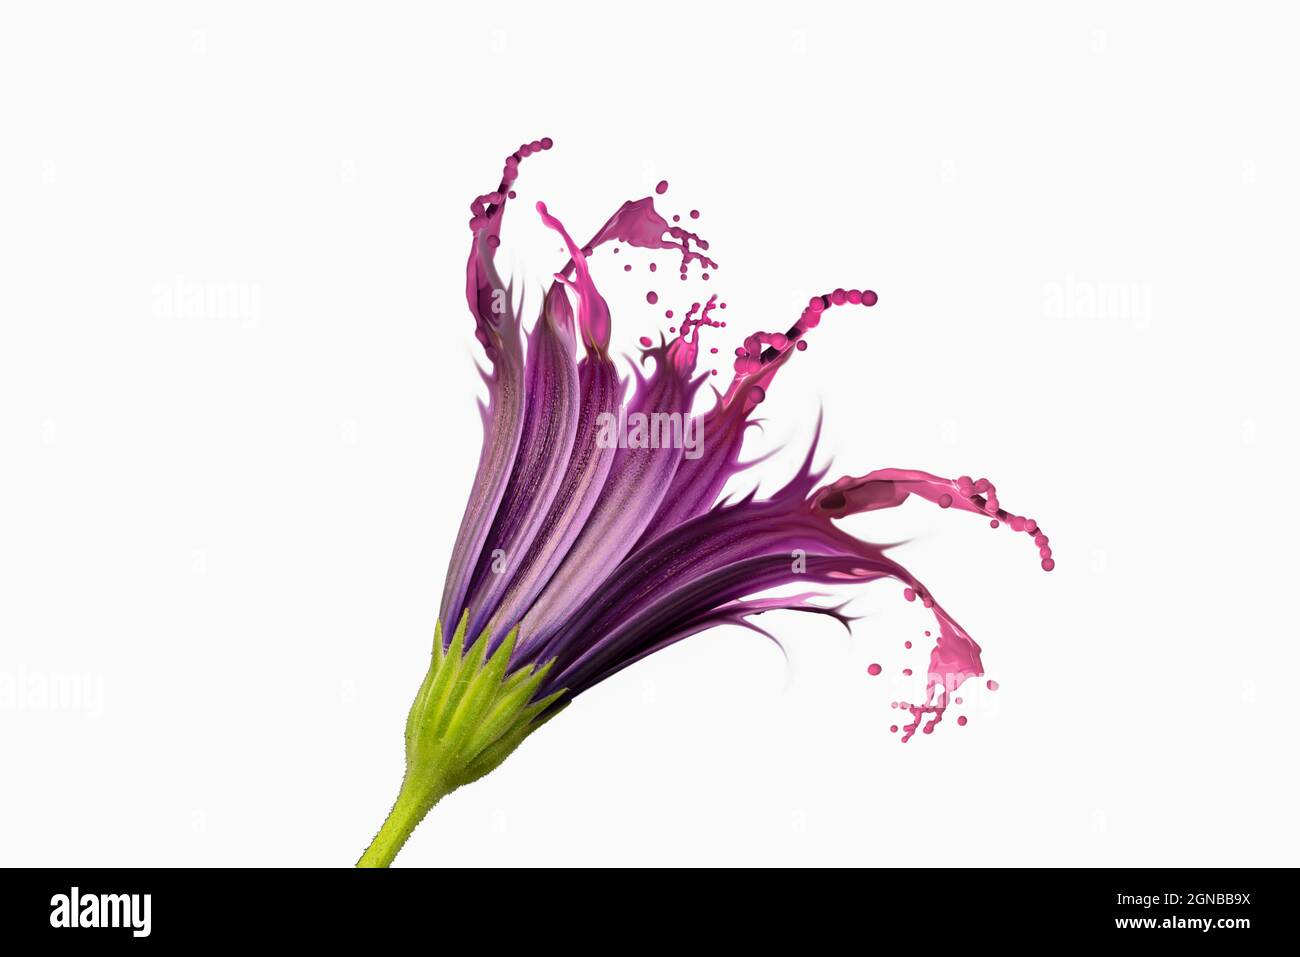 liquid purple daisy flower with white background Stock Photo